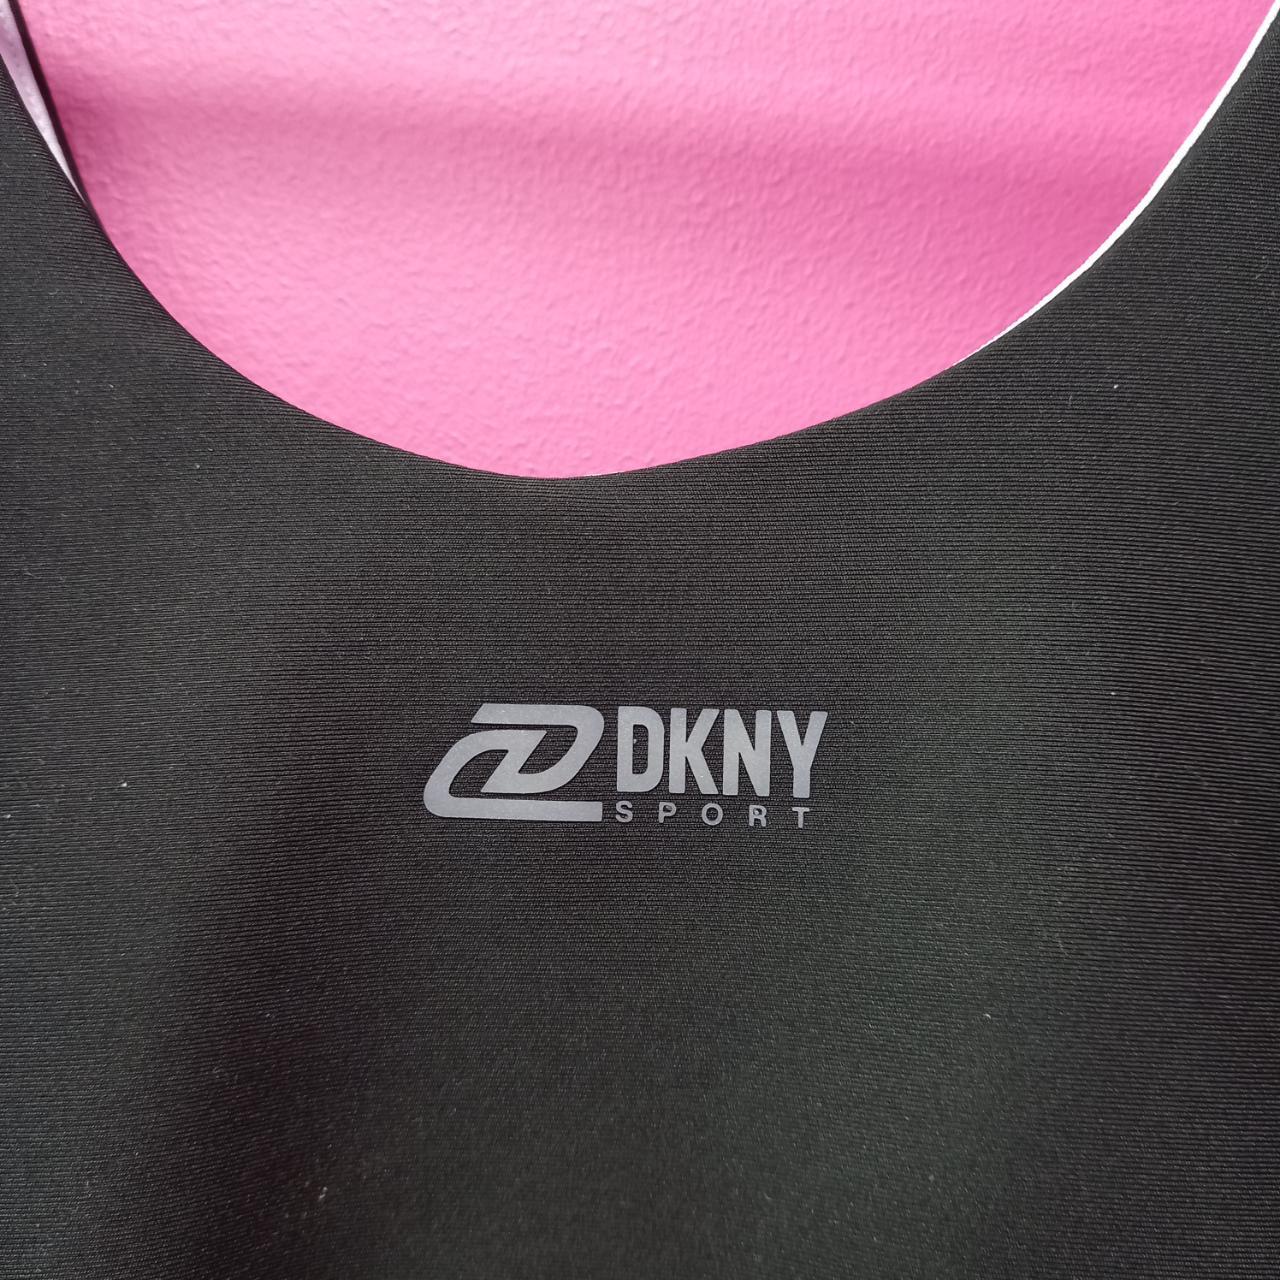 415721, DKNY SPORT sports bra in black/white, 